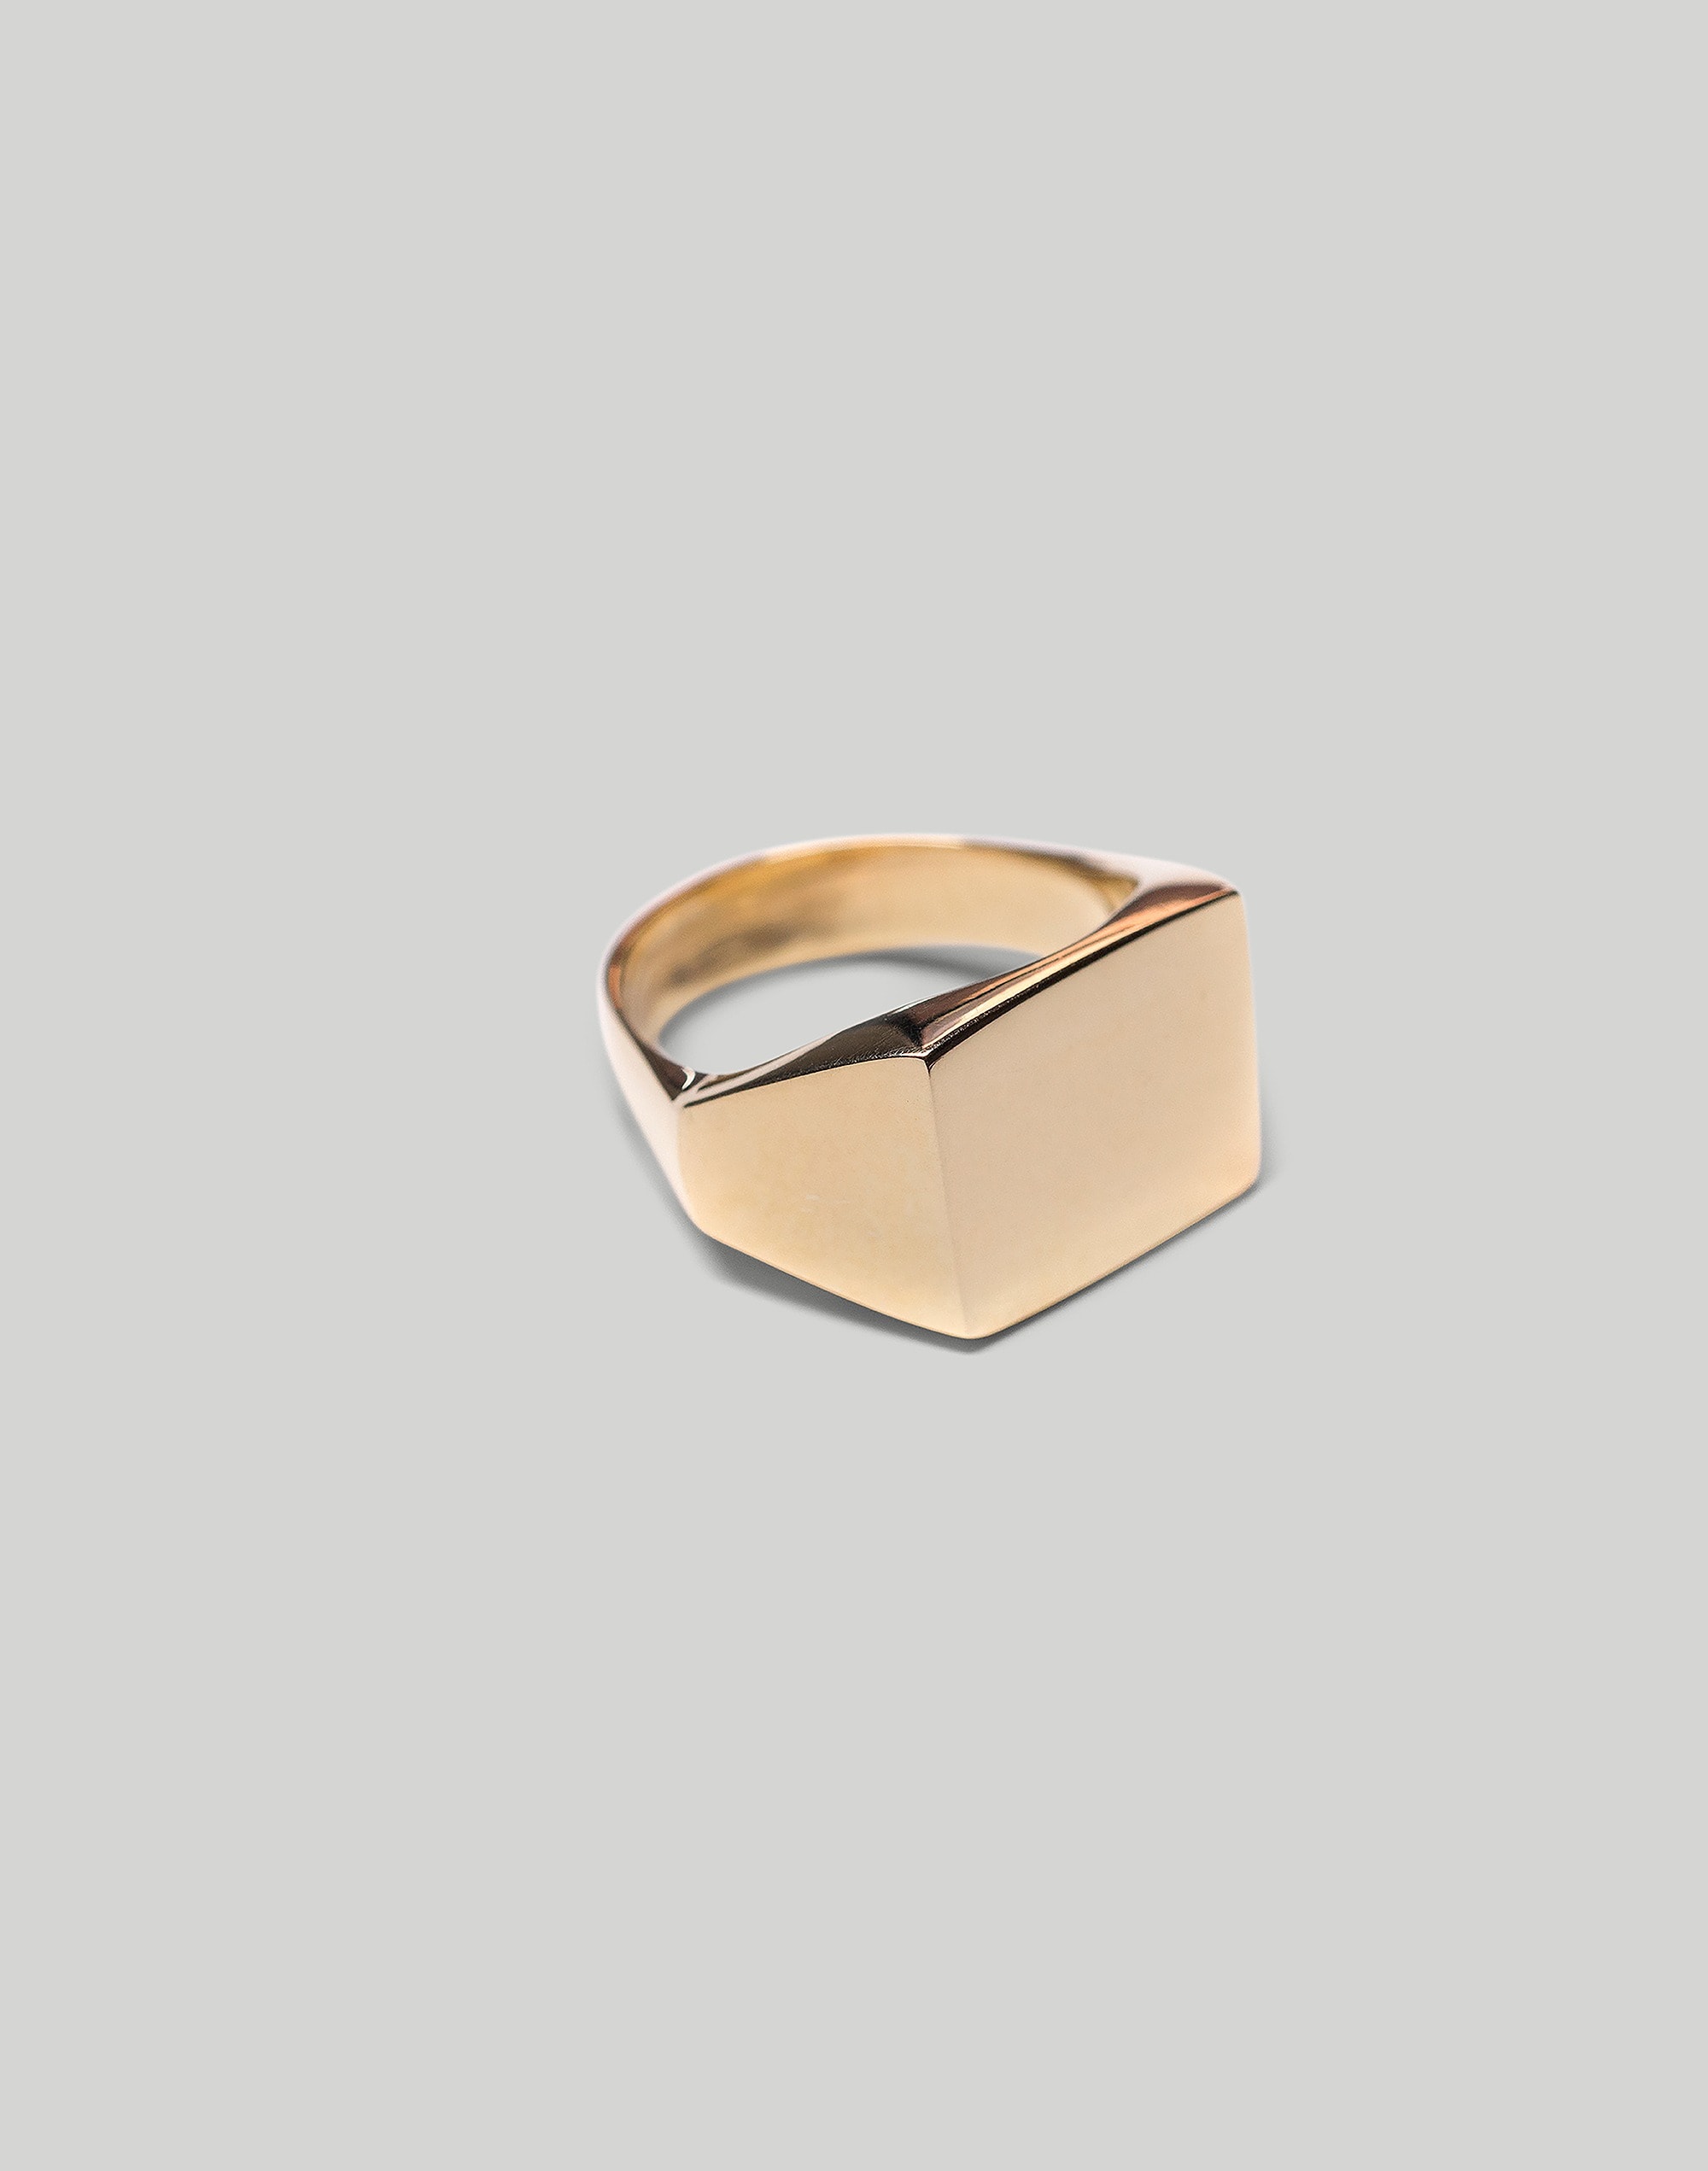 CHARLOTTE CAUWE STUDIO Delicate Signet Ring Brass